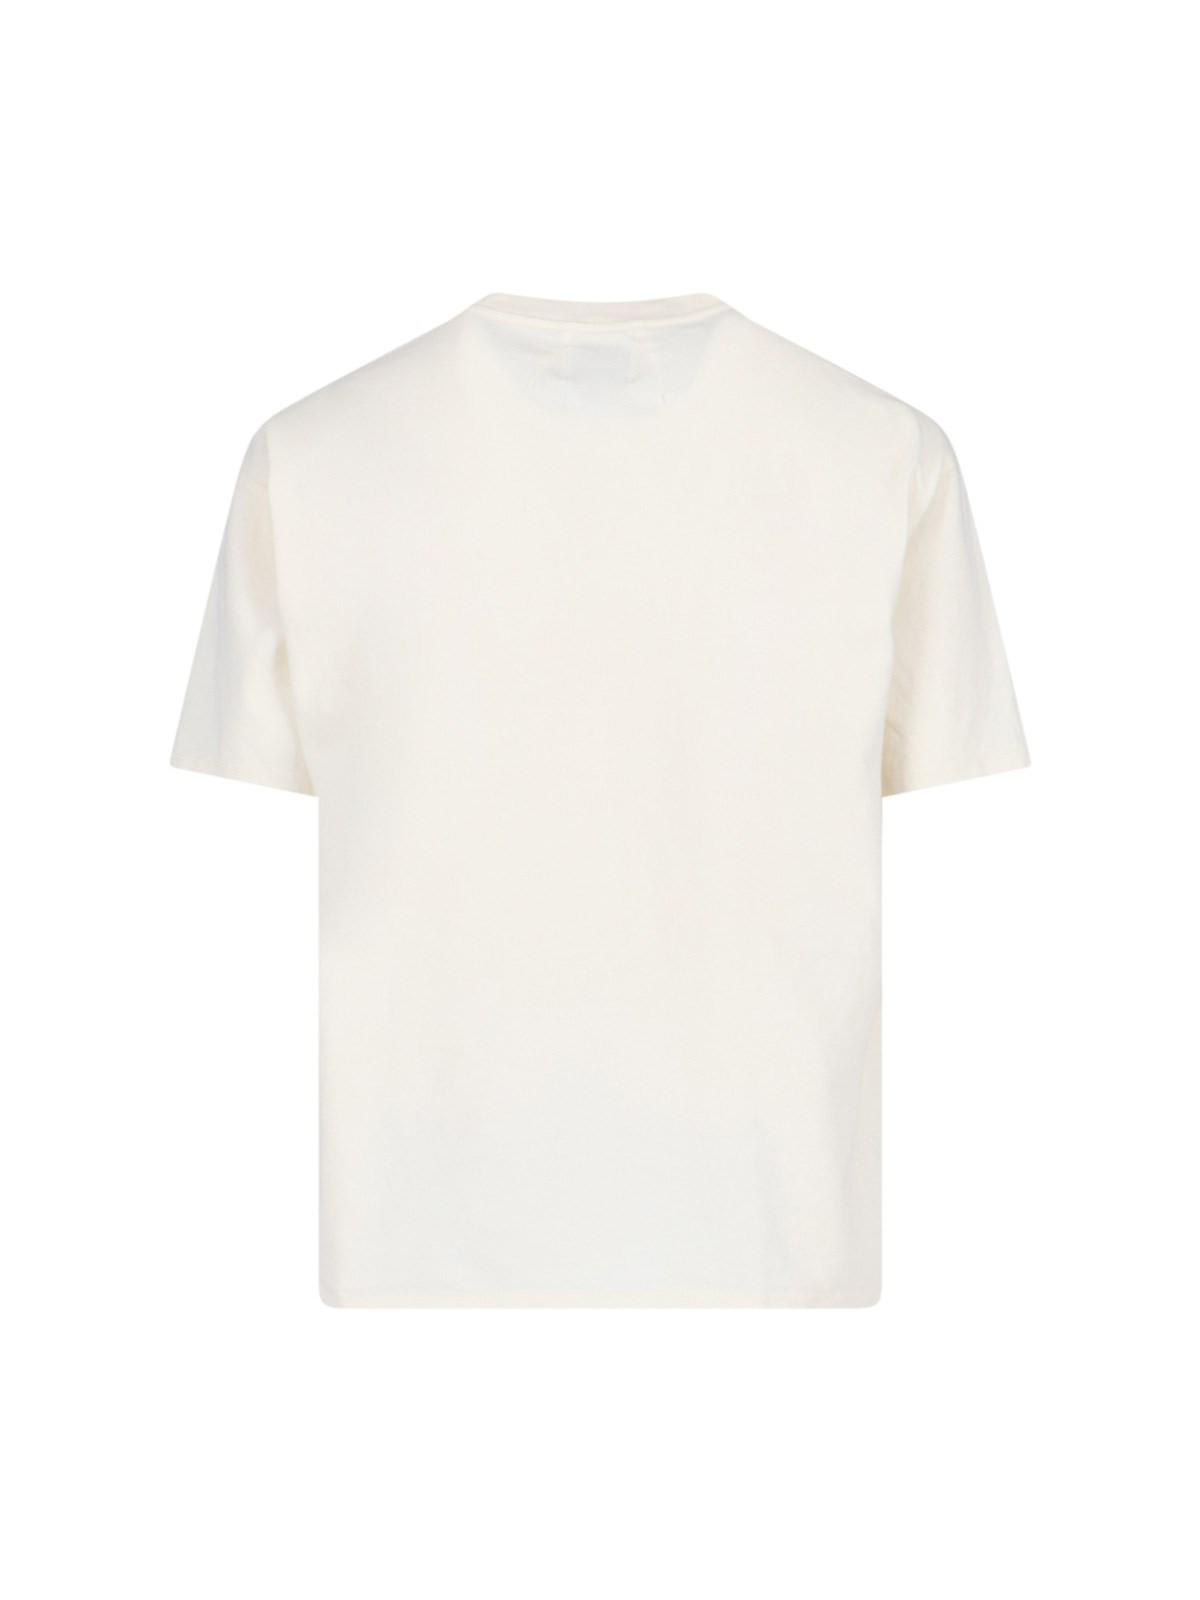 Rhude saint Groix T-shirt